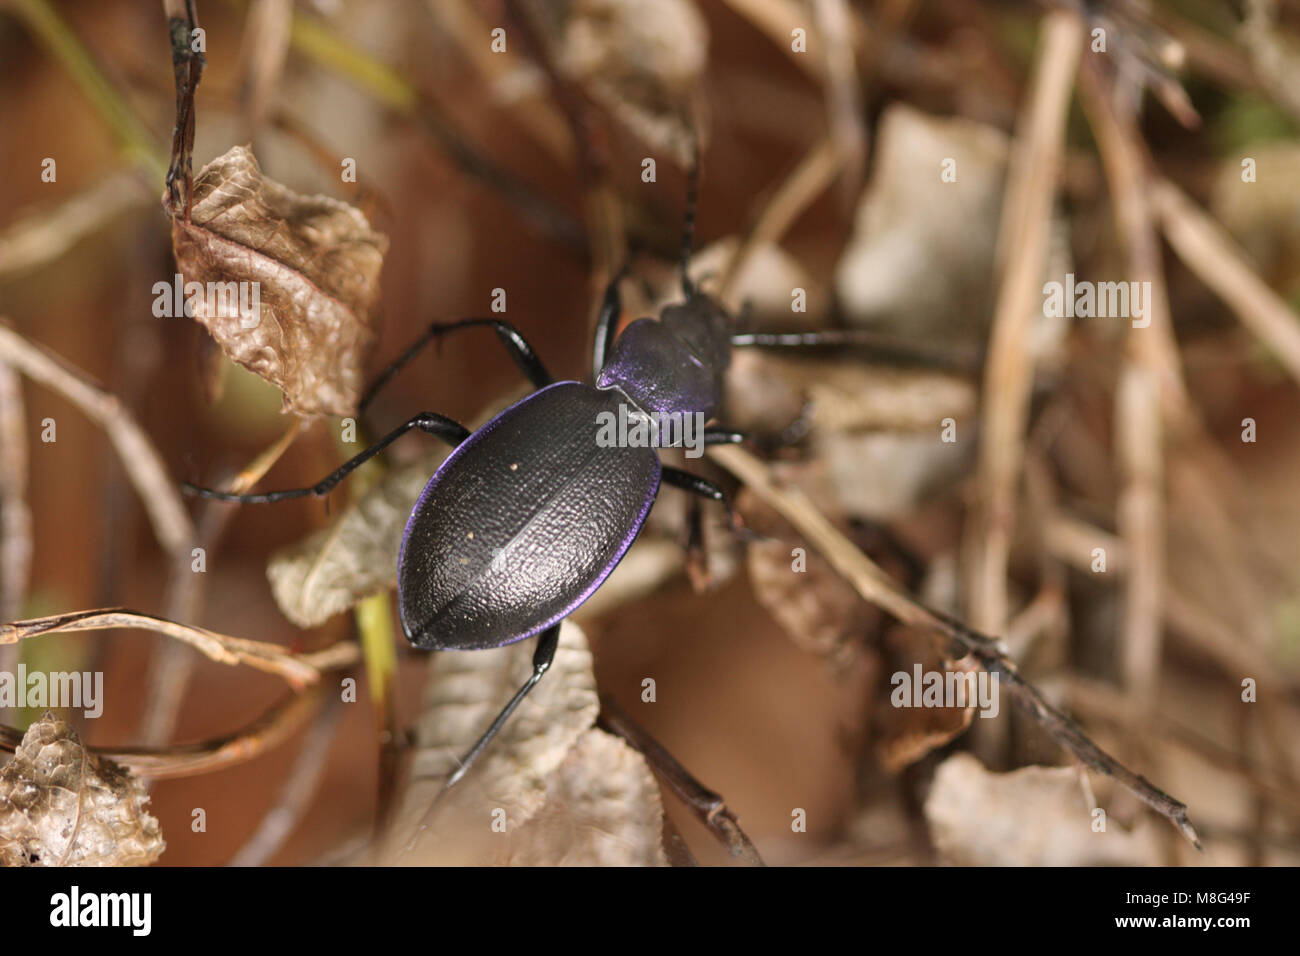 Violet ground beetle, Carabus violaceus Stock Photo